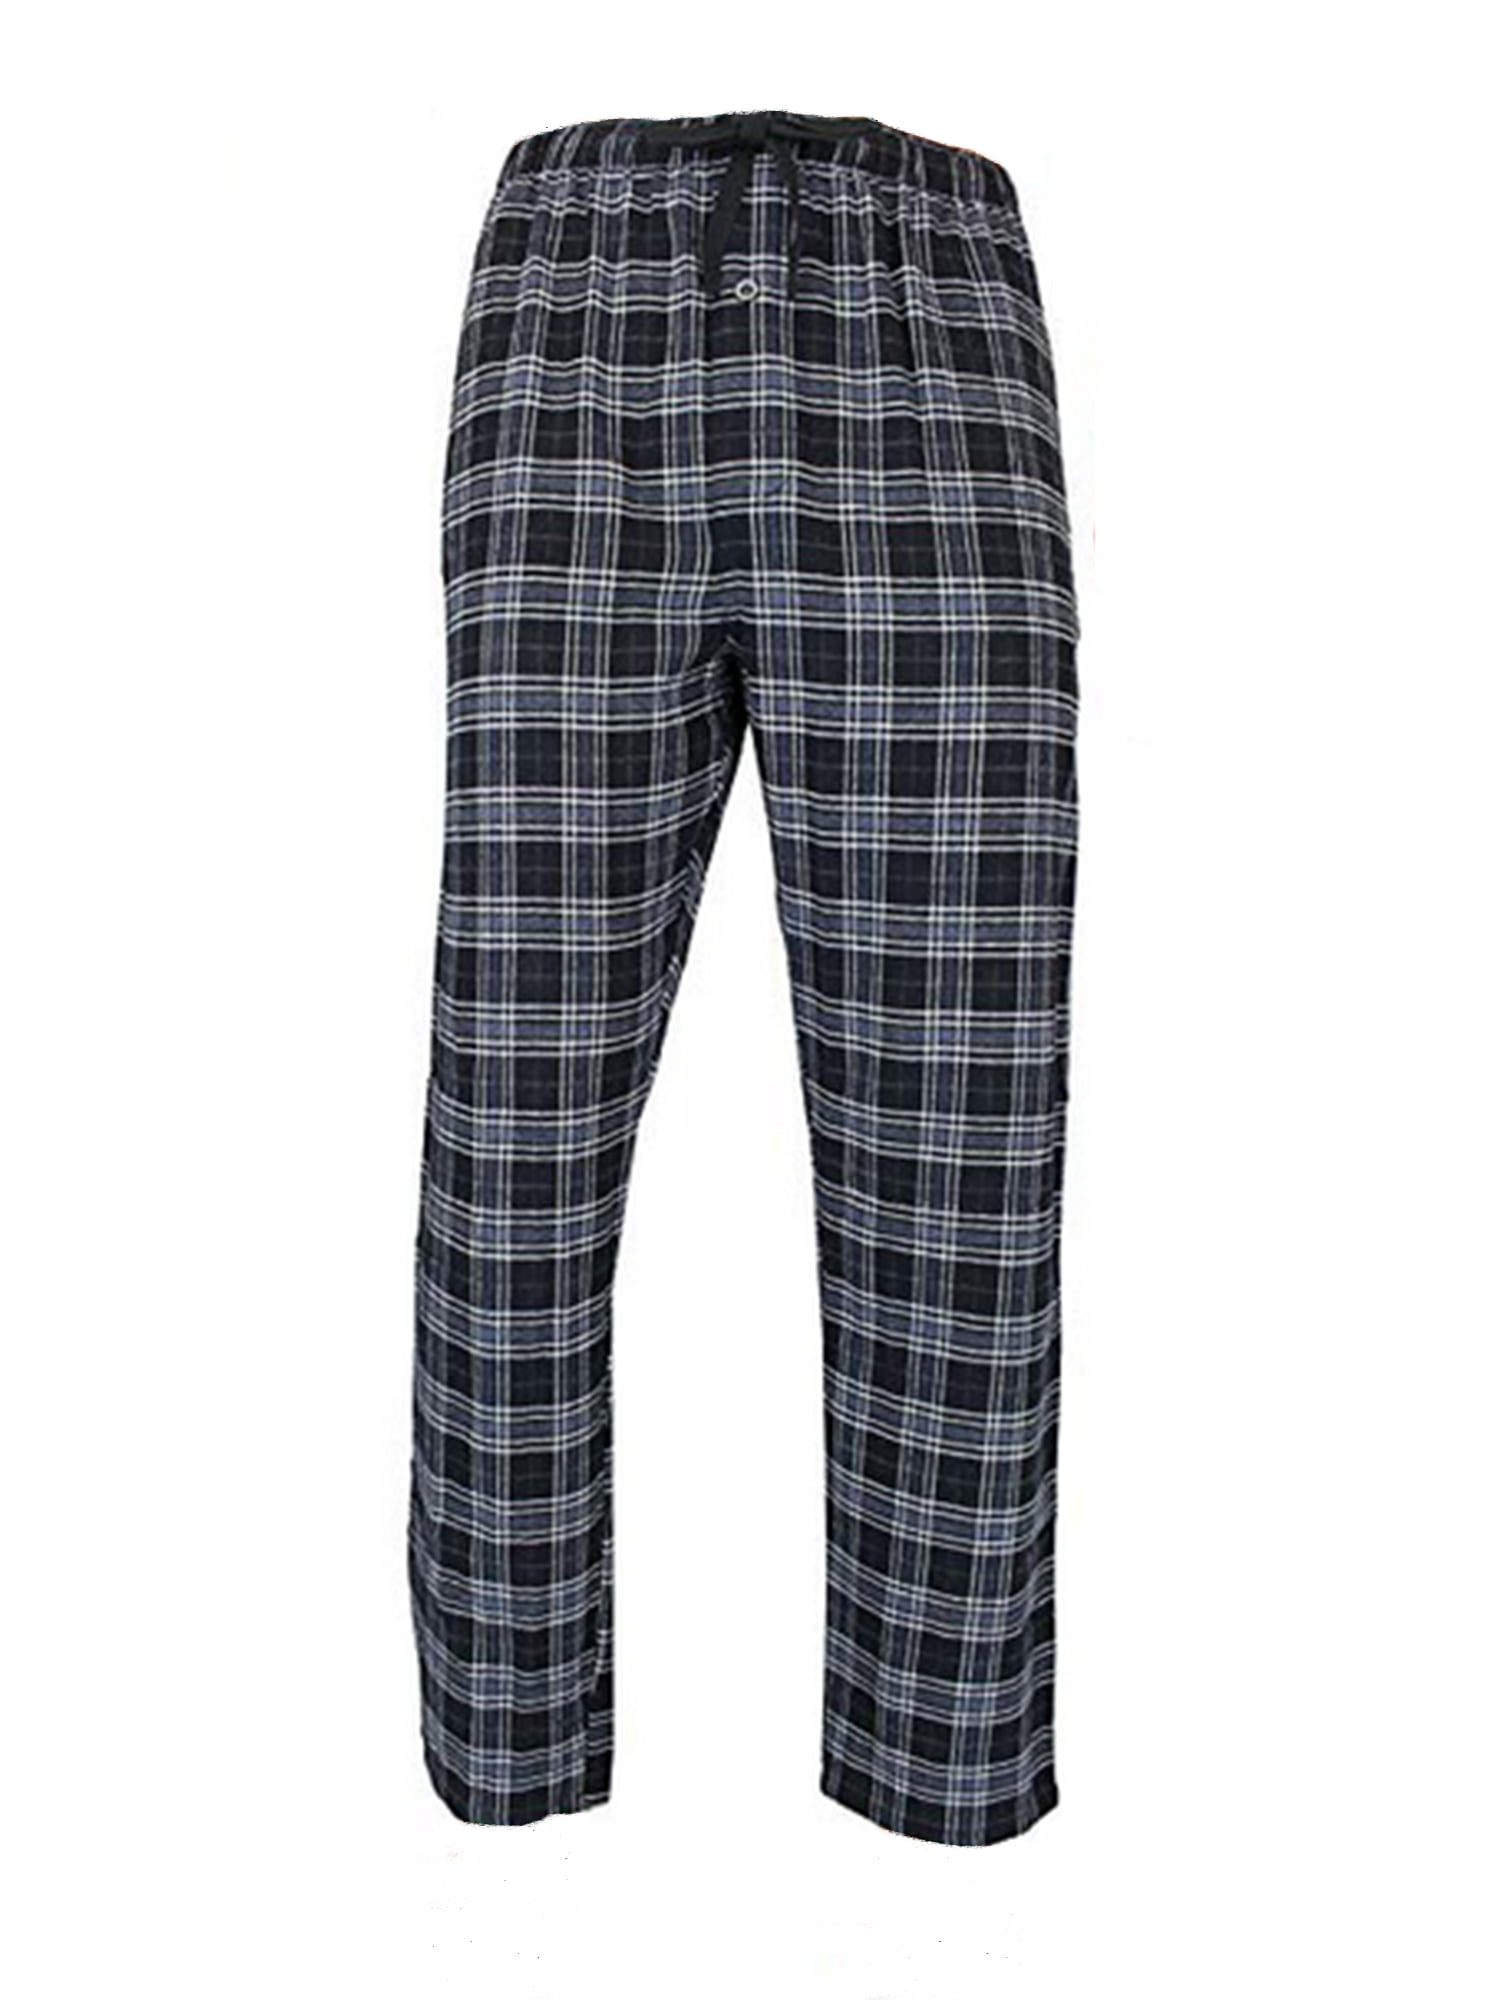 BEELADAN Men's Plaid Pajama Bottom Pants Sleepwear Lounging Relaxed ...